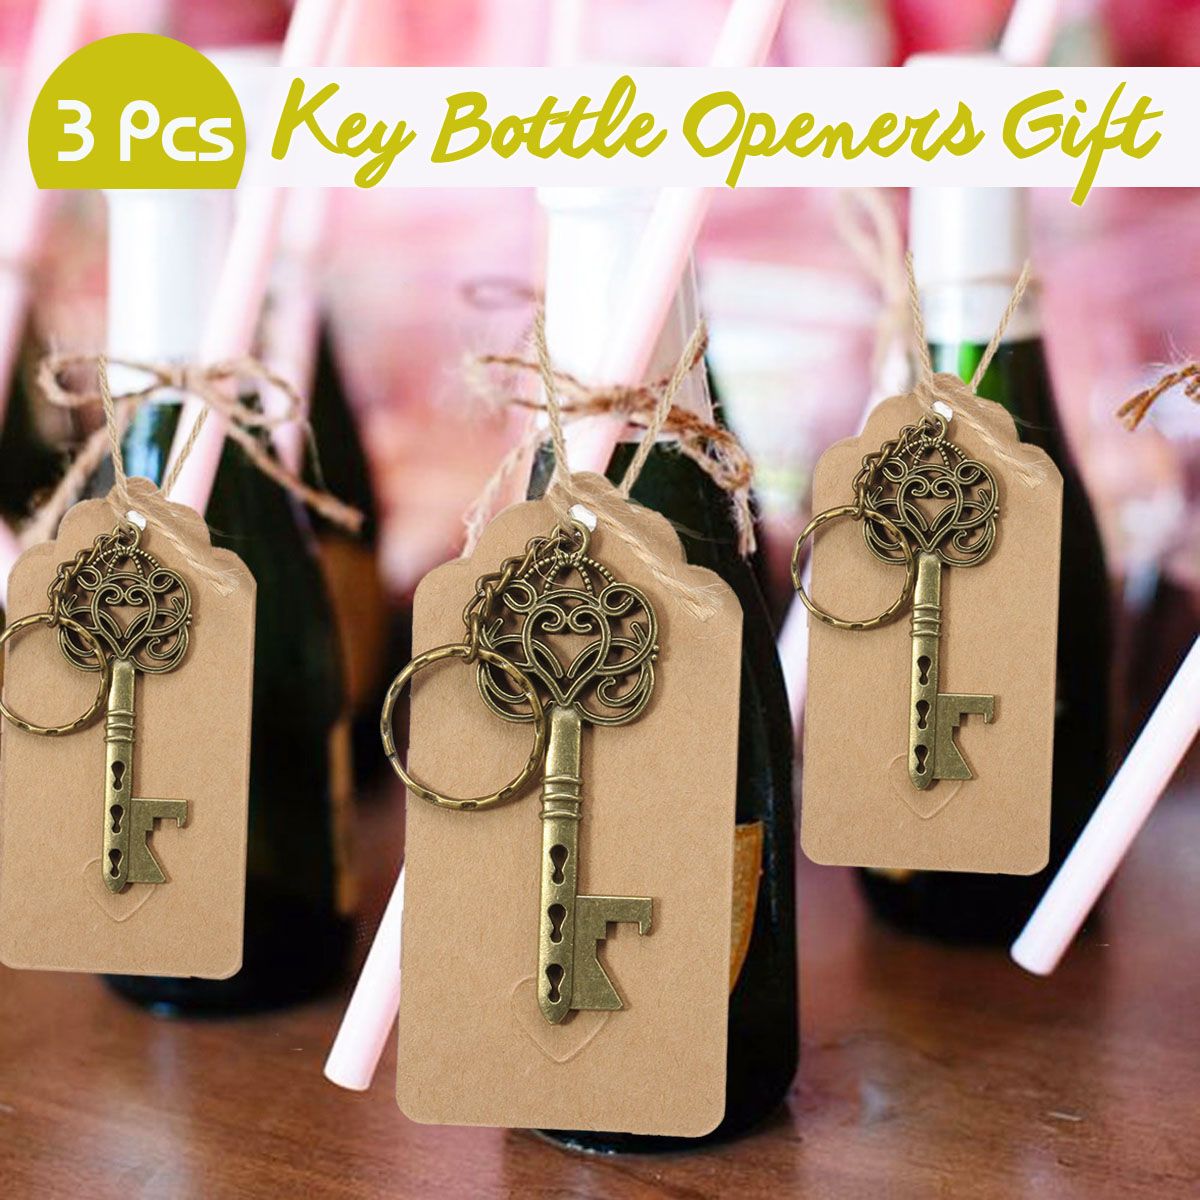 3Pcs-Vintage-Key-Bottle-Opener-Wedding-Favor-Gift-Candy-Box-Set-Kit-1413148